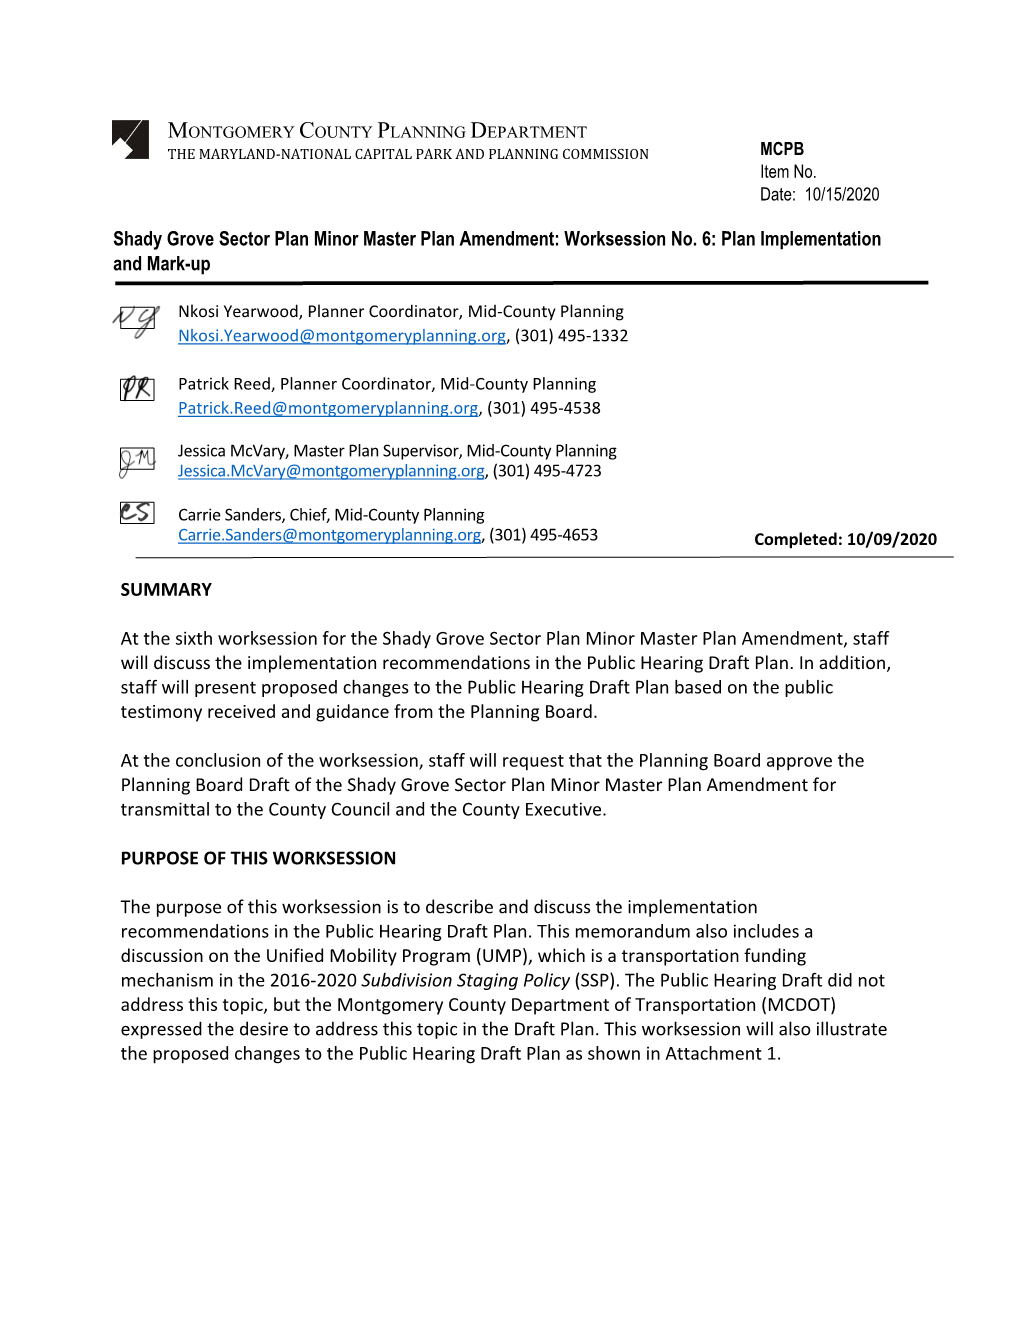 Shady Grove Sector Plan Minor Master Plan Amendment: Worksession No